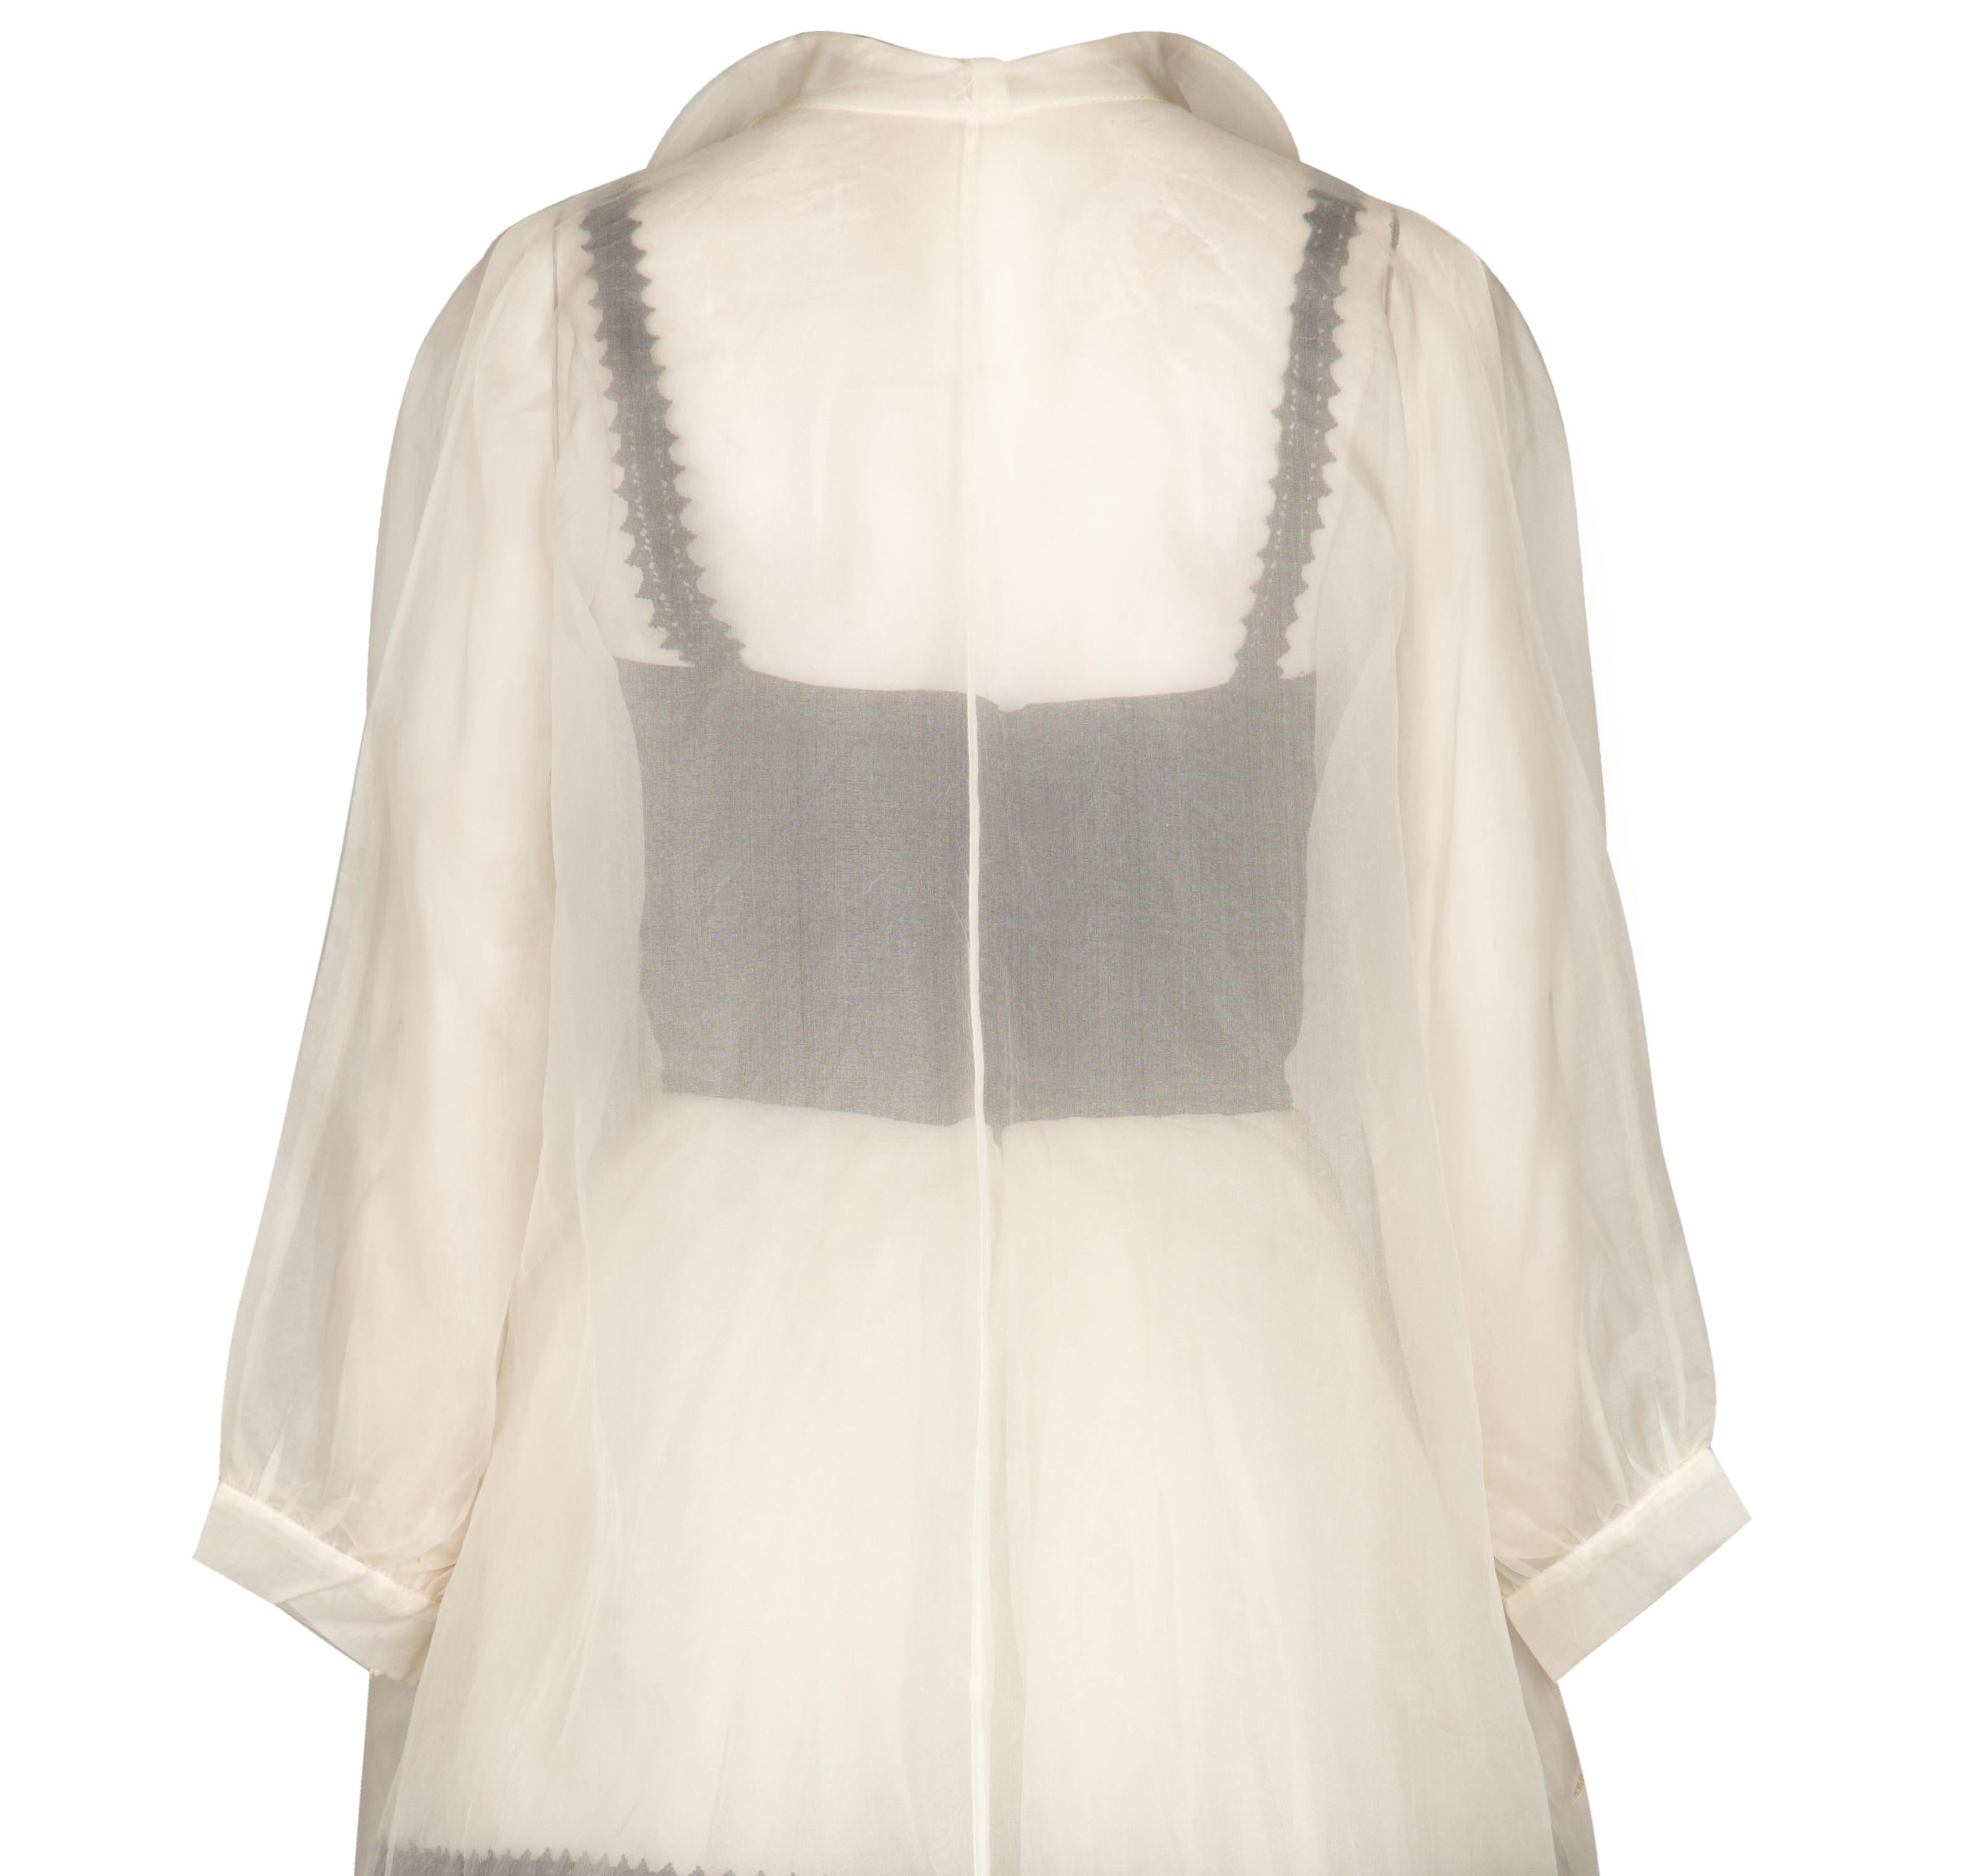 Women's 1950s Monochrome Dress With White Silk Organza Overcoat